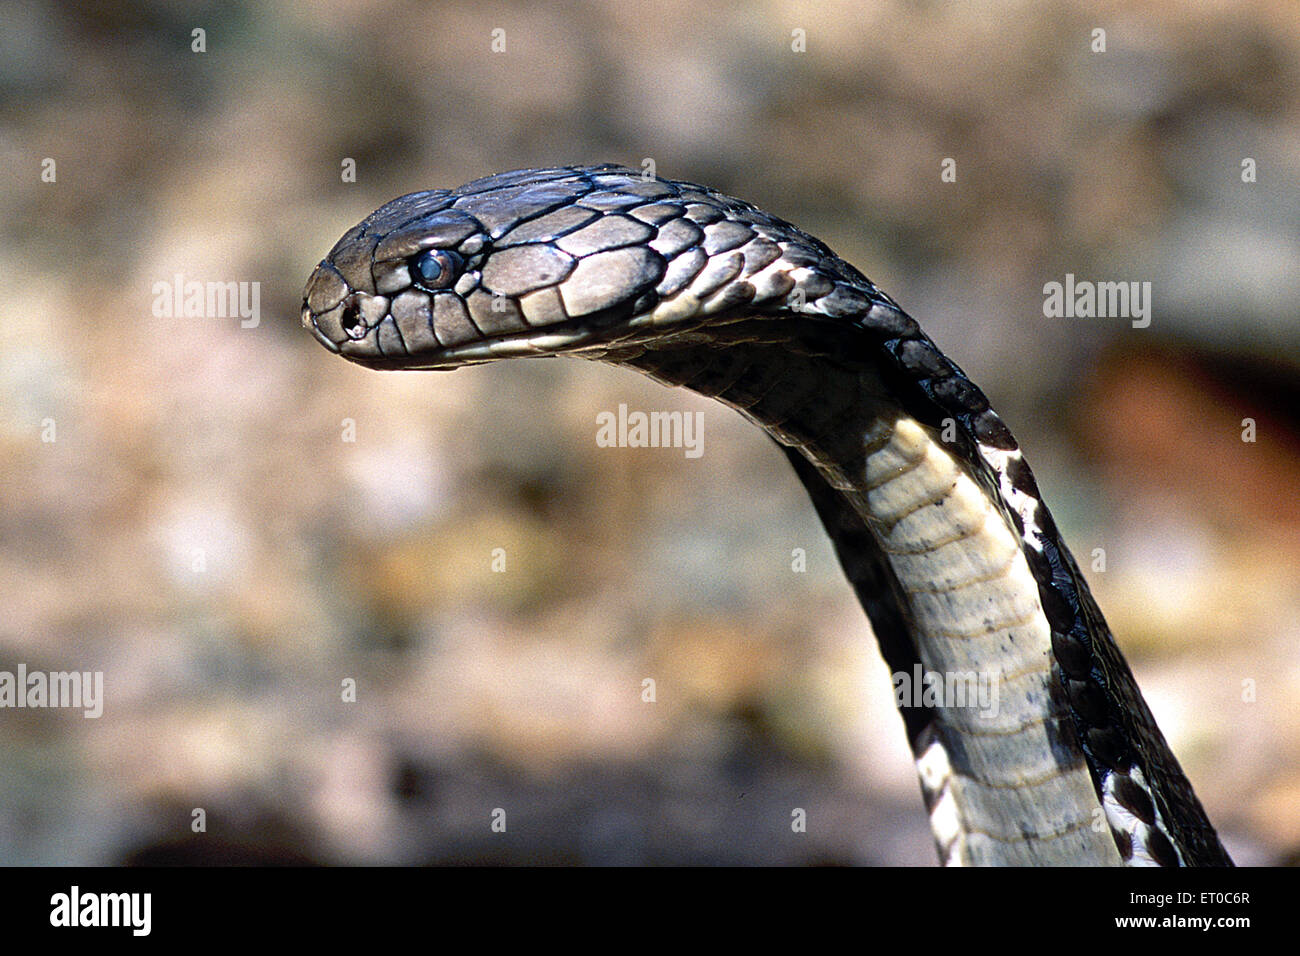 King cobra, ophiophagus hannah, longest venomous snake, Karnataka ; India, asia Stock Photo